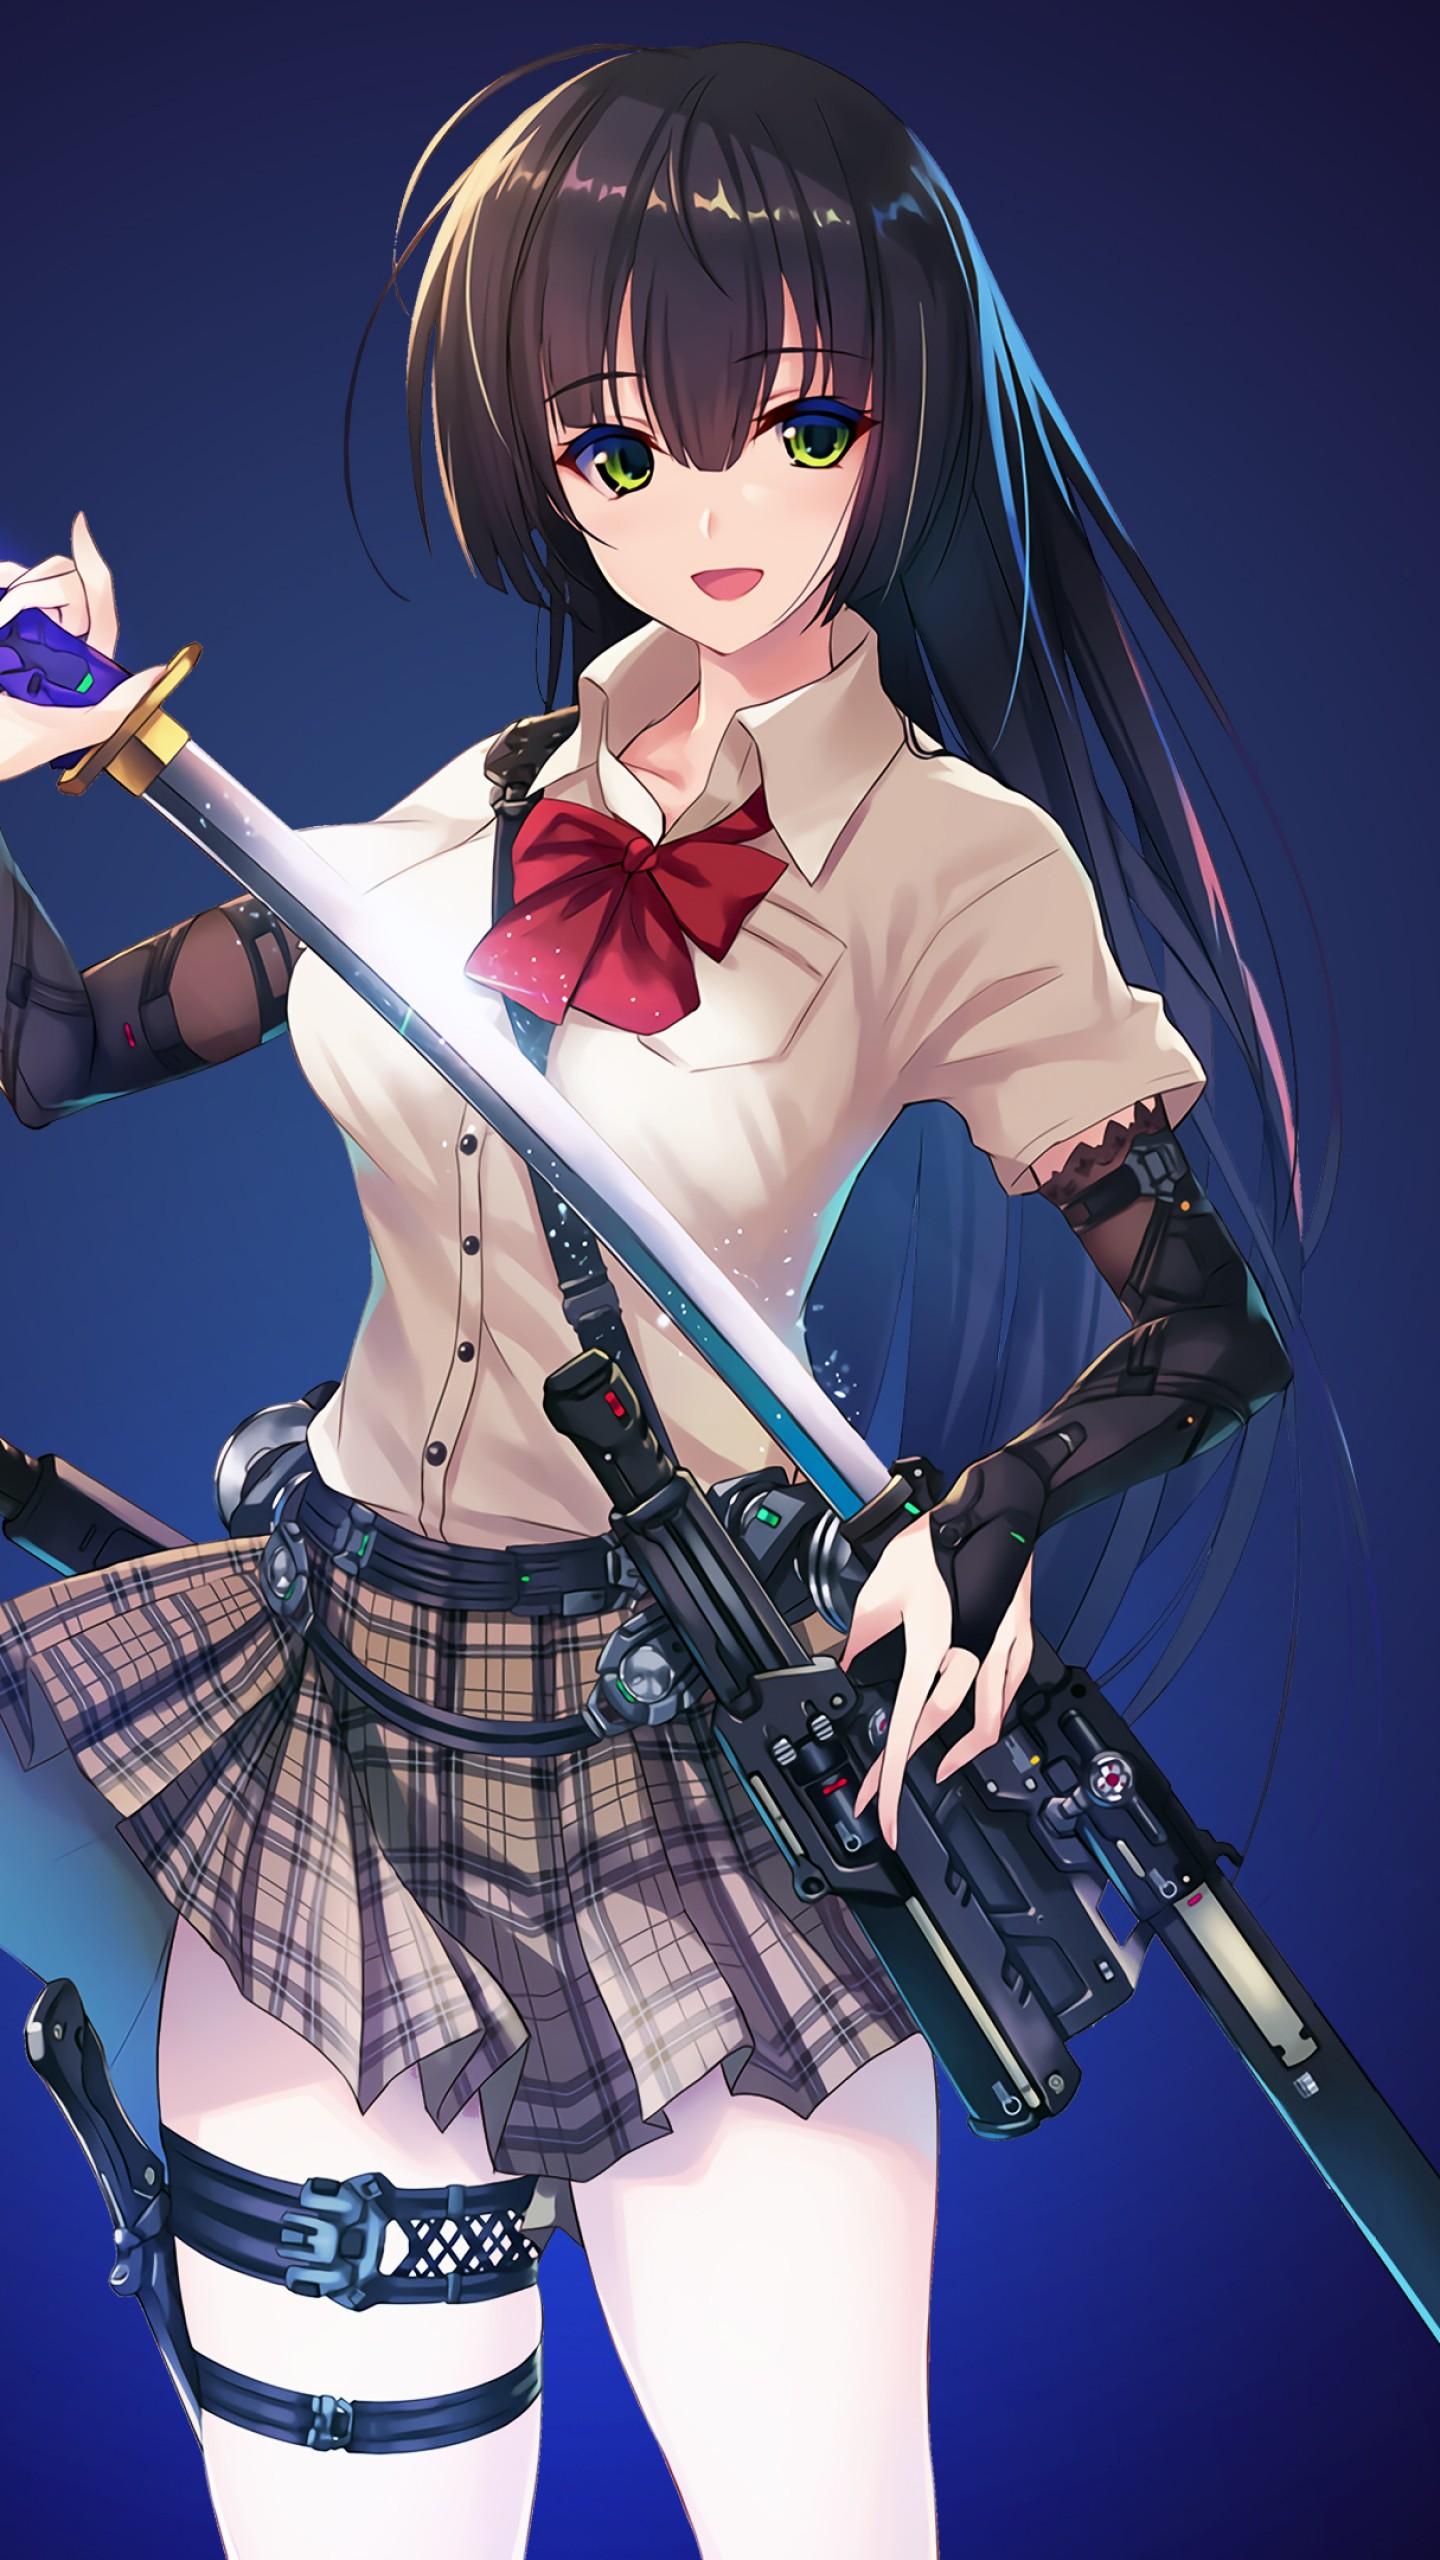 Anime / Anime Girl Wallpaper Anime Samurai Sword